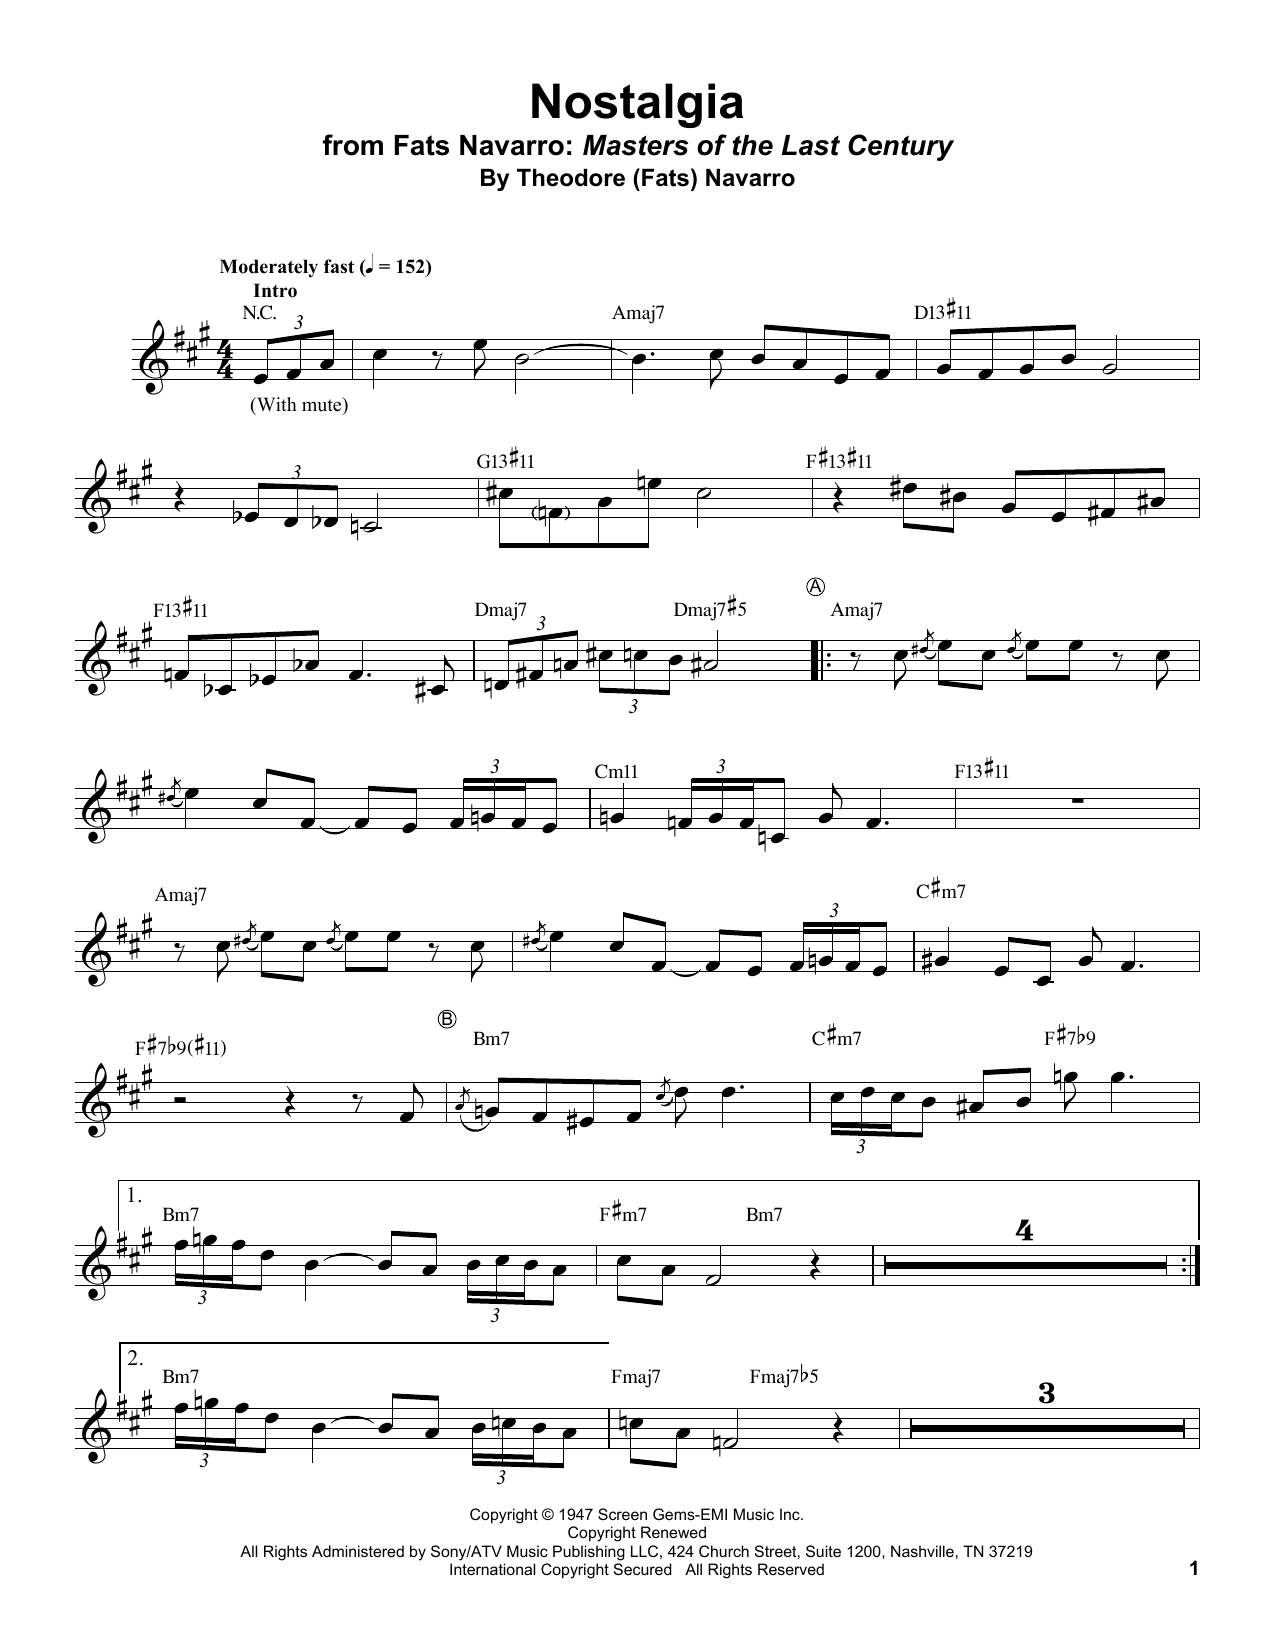 Fats Navarro Nostalgia Sheet Music Notes & Chords for Trumpet Transcription - Download or Print PDF